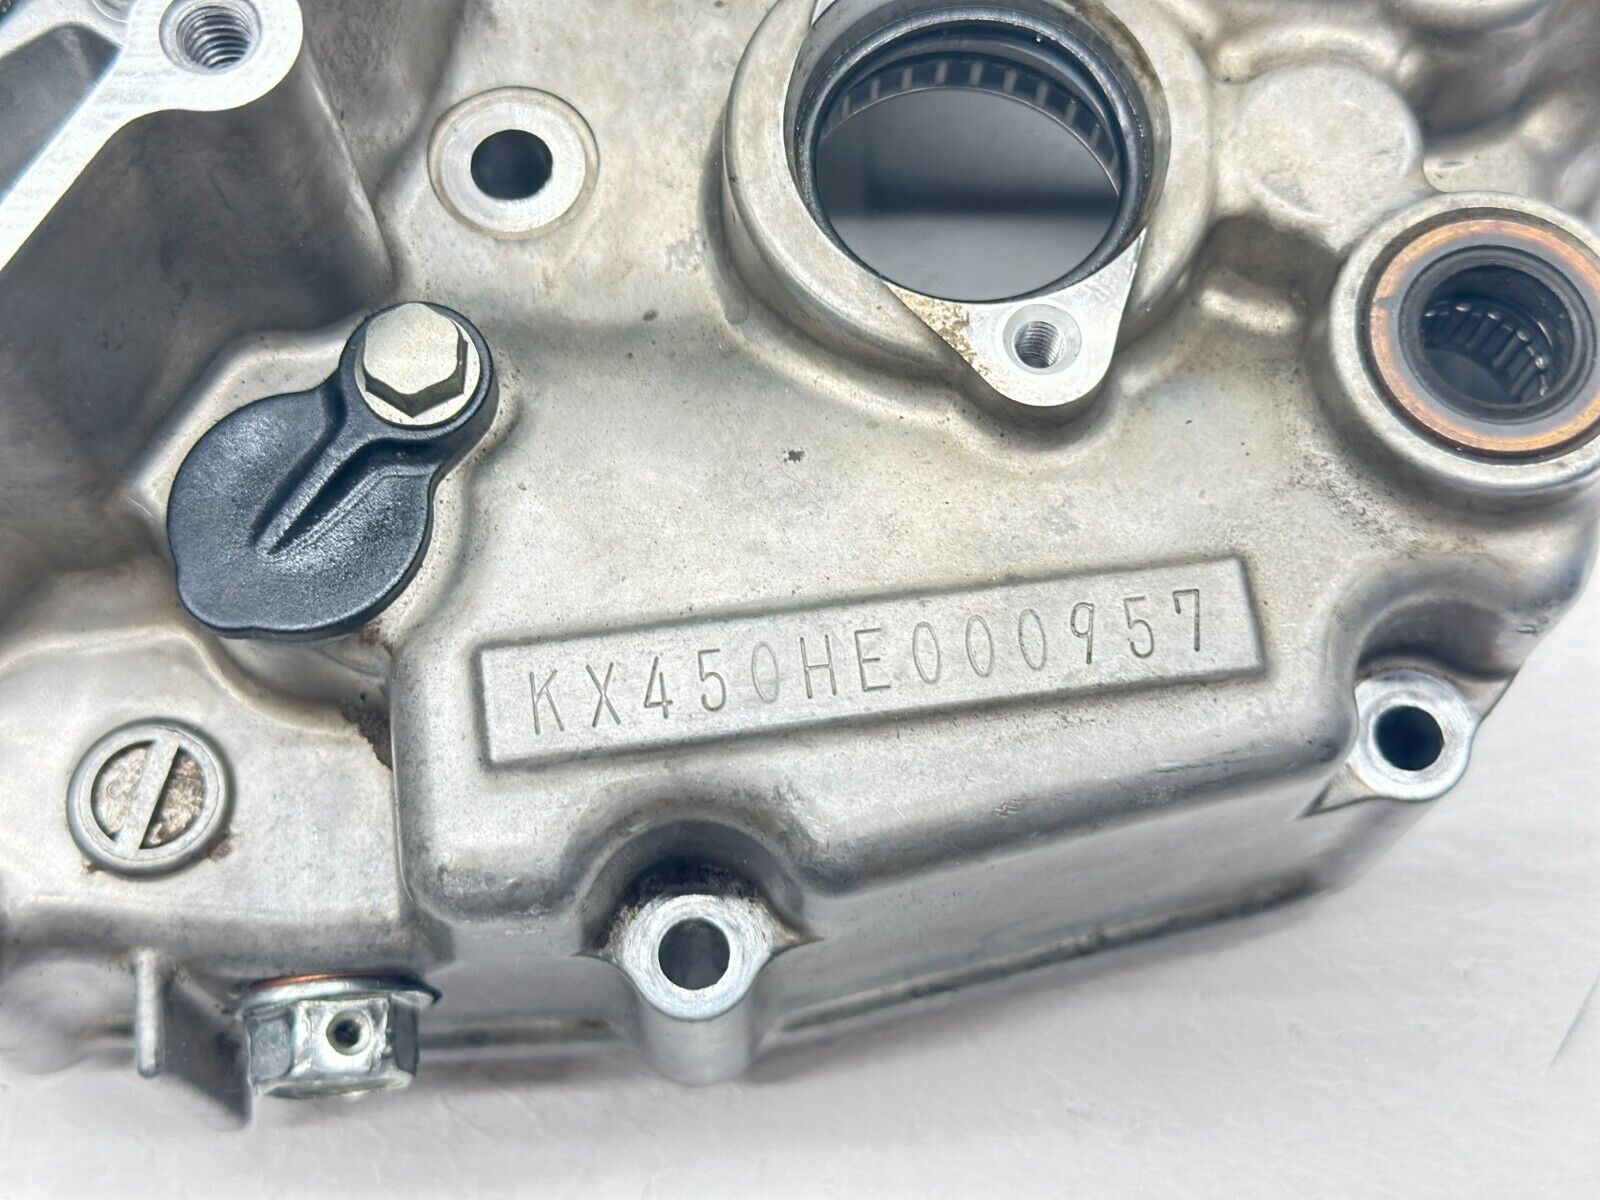 2018 Kawasaki KX450F Left Side Engine Crankcase Motor Half Case Bottom 2016 2017